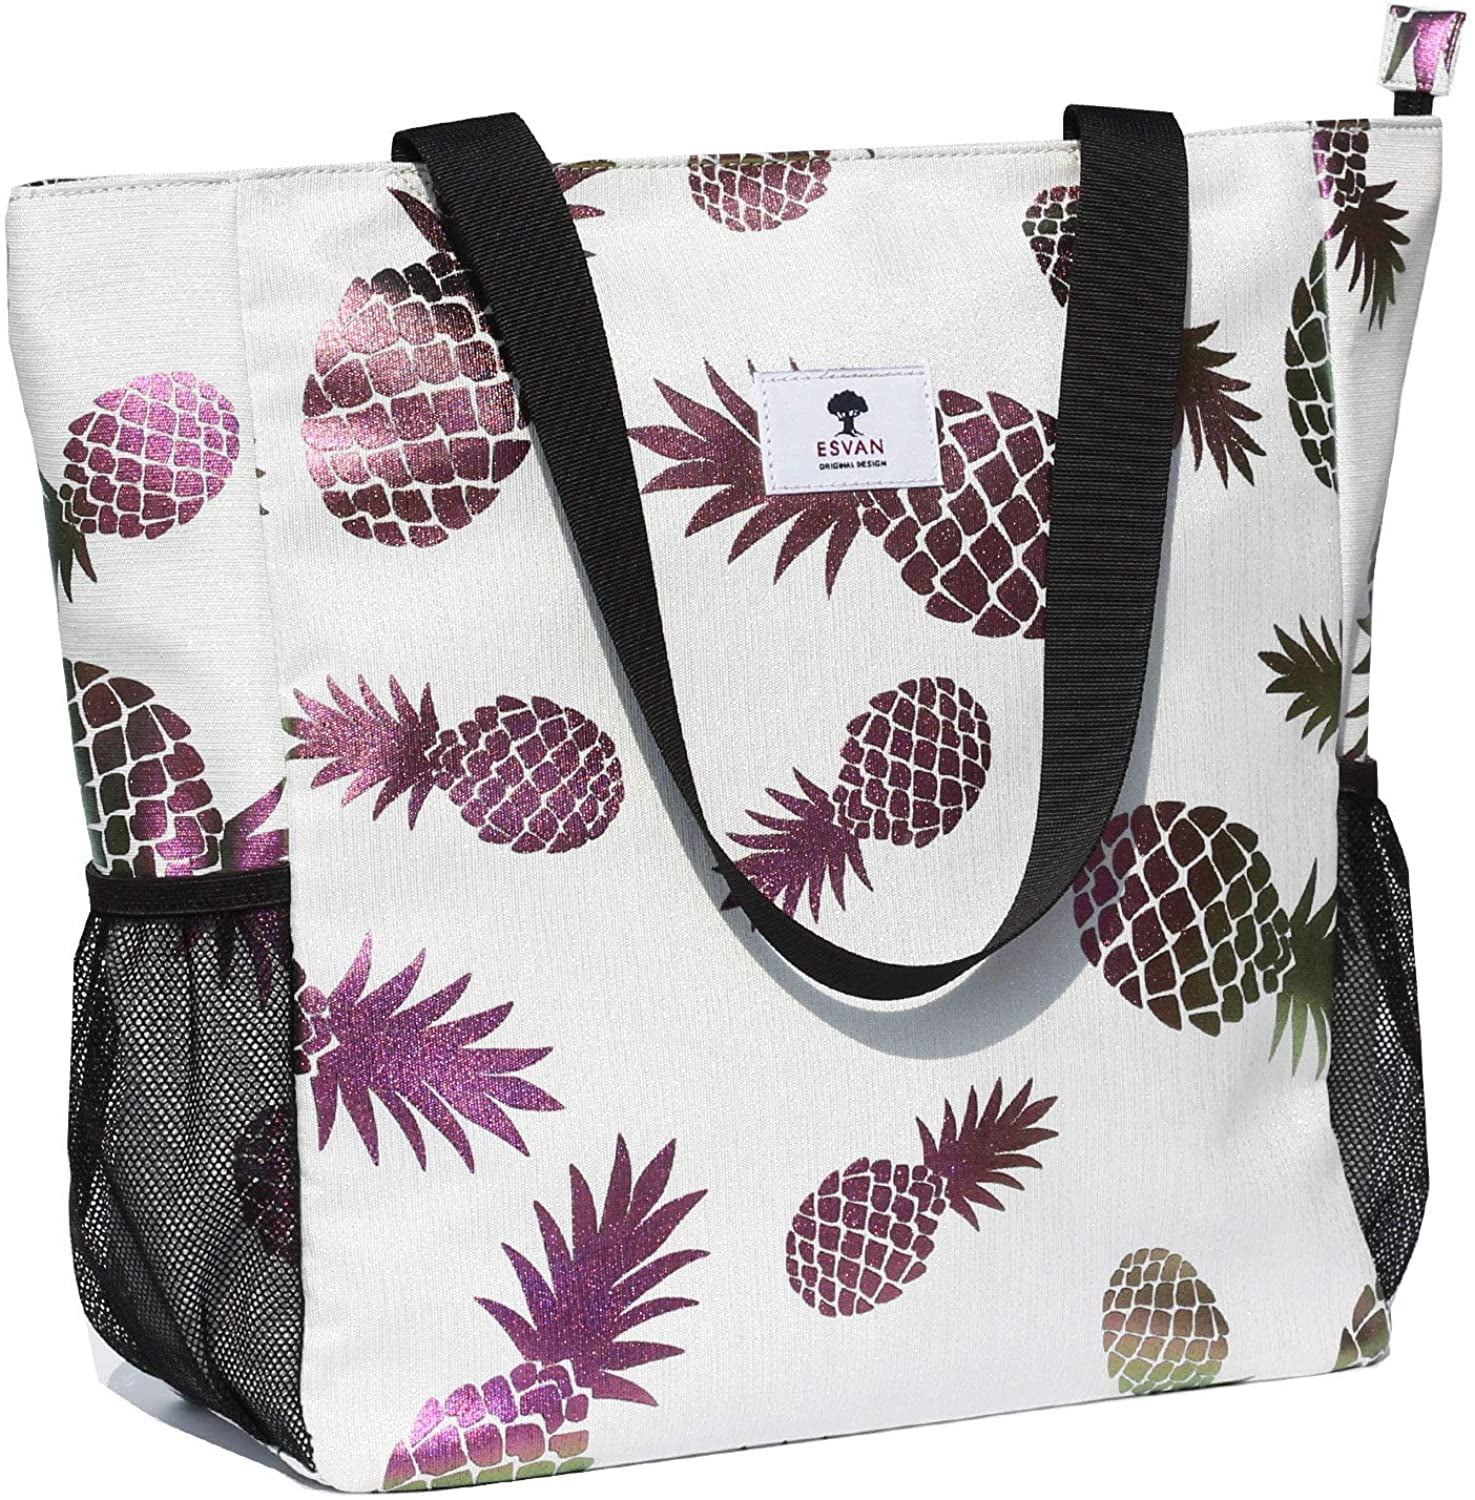 Original Floral Water Resistant Large Tote Bag Shoulder Bag for Gym Beach Travel Daily Bags